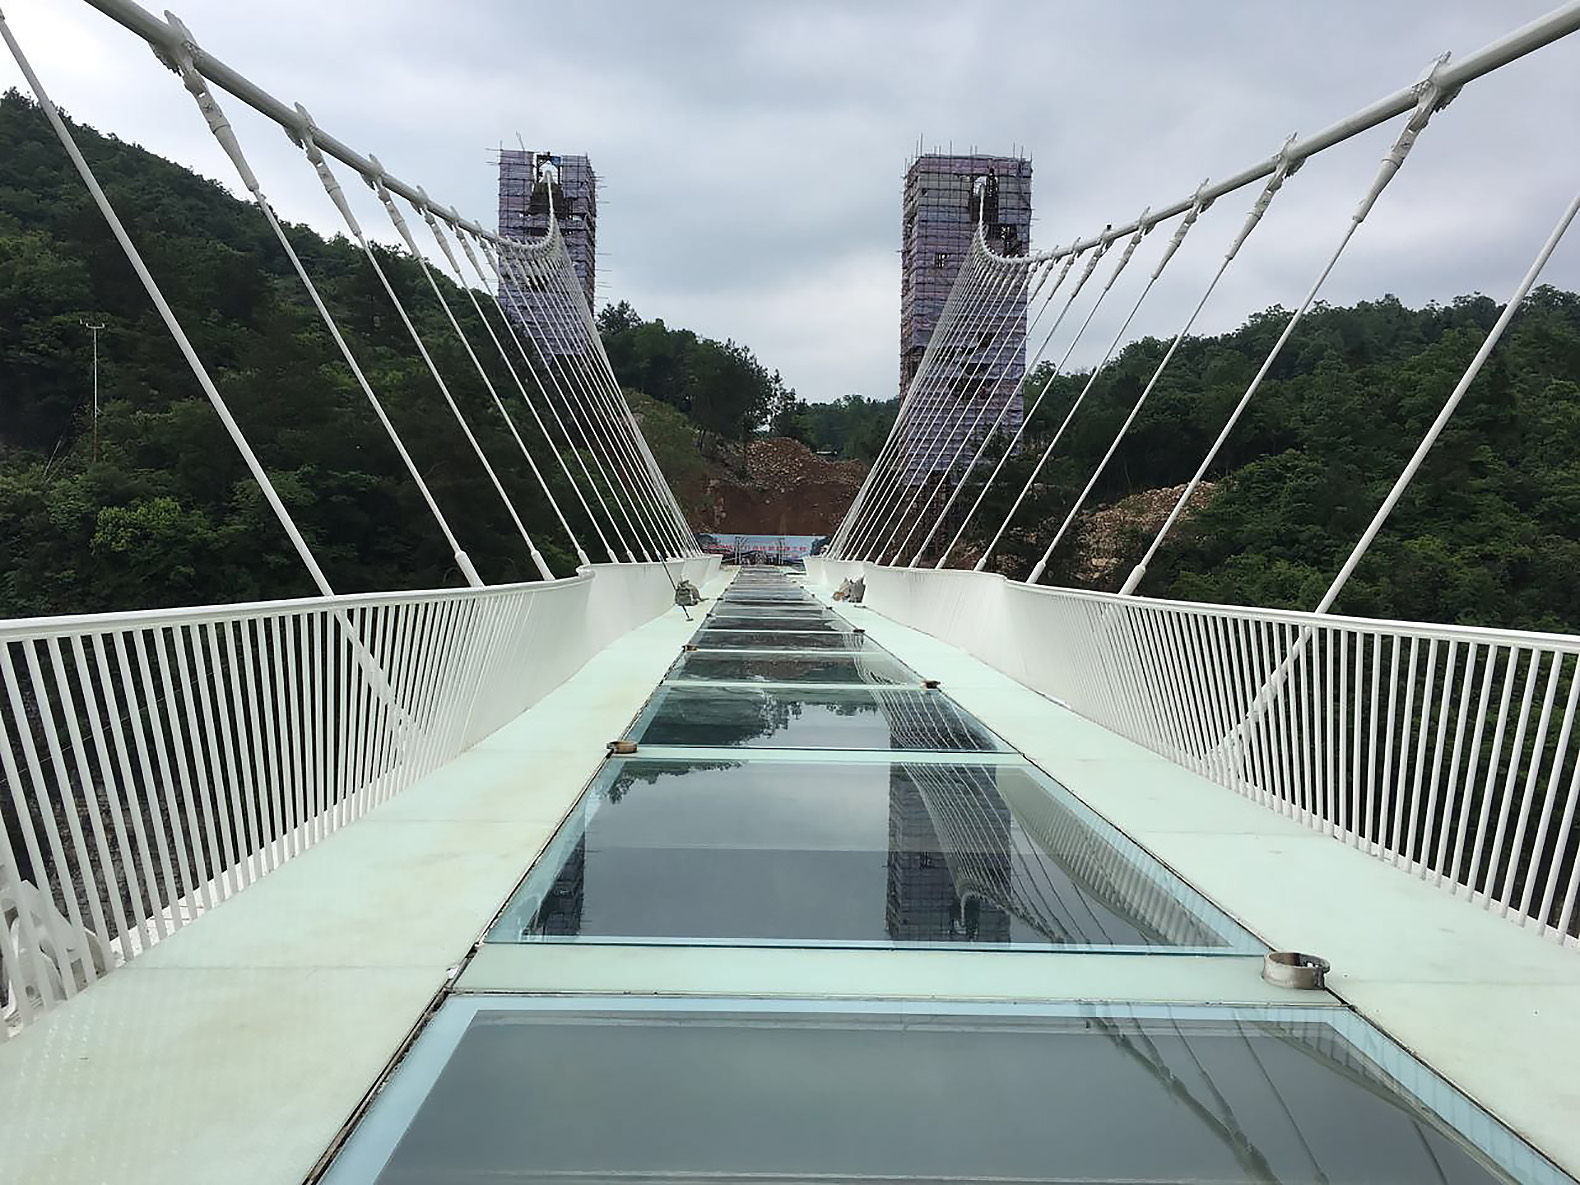 China opens World’s longest, highest glass bridge